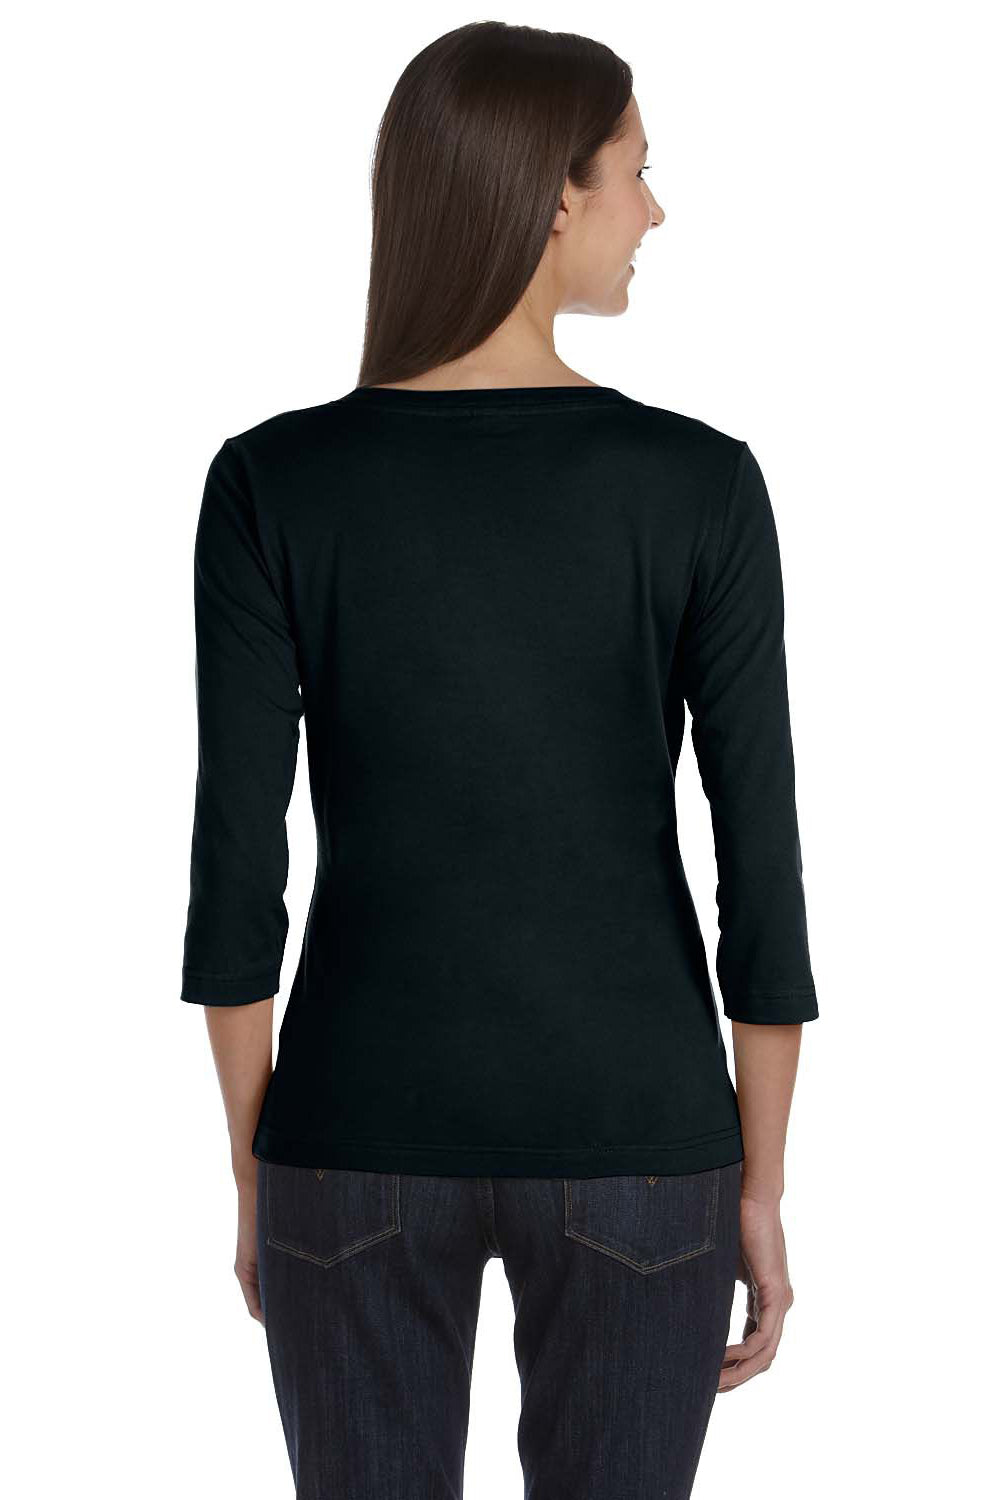 LAT 3577 Womens Premium Jersey 3/4 Sleeve V-Neck T-Shirt Black Back